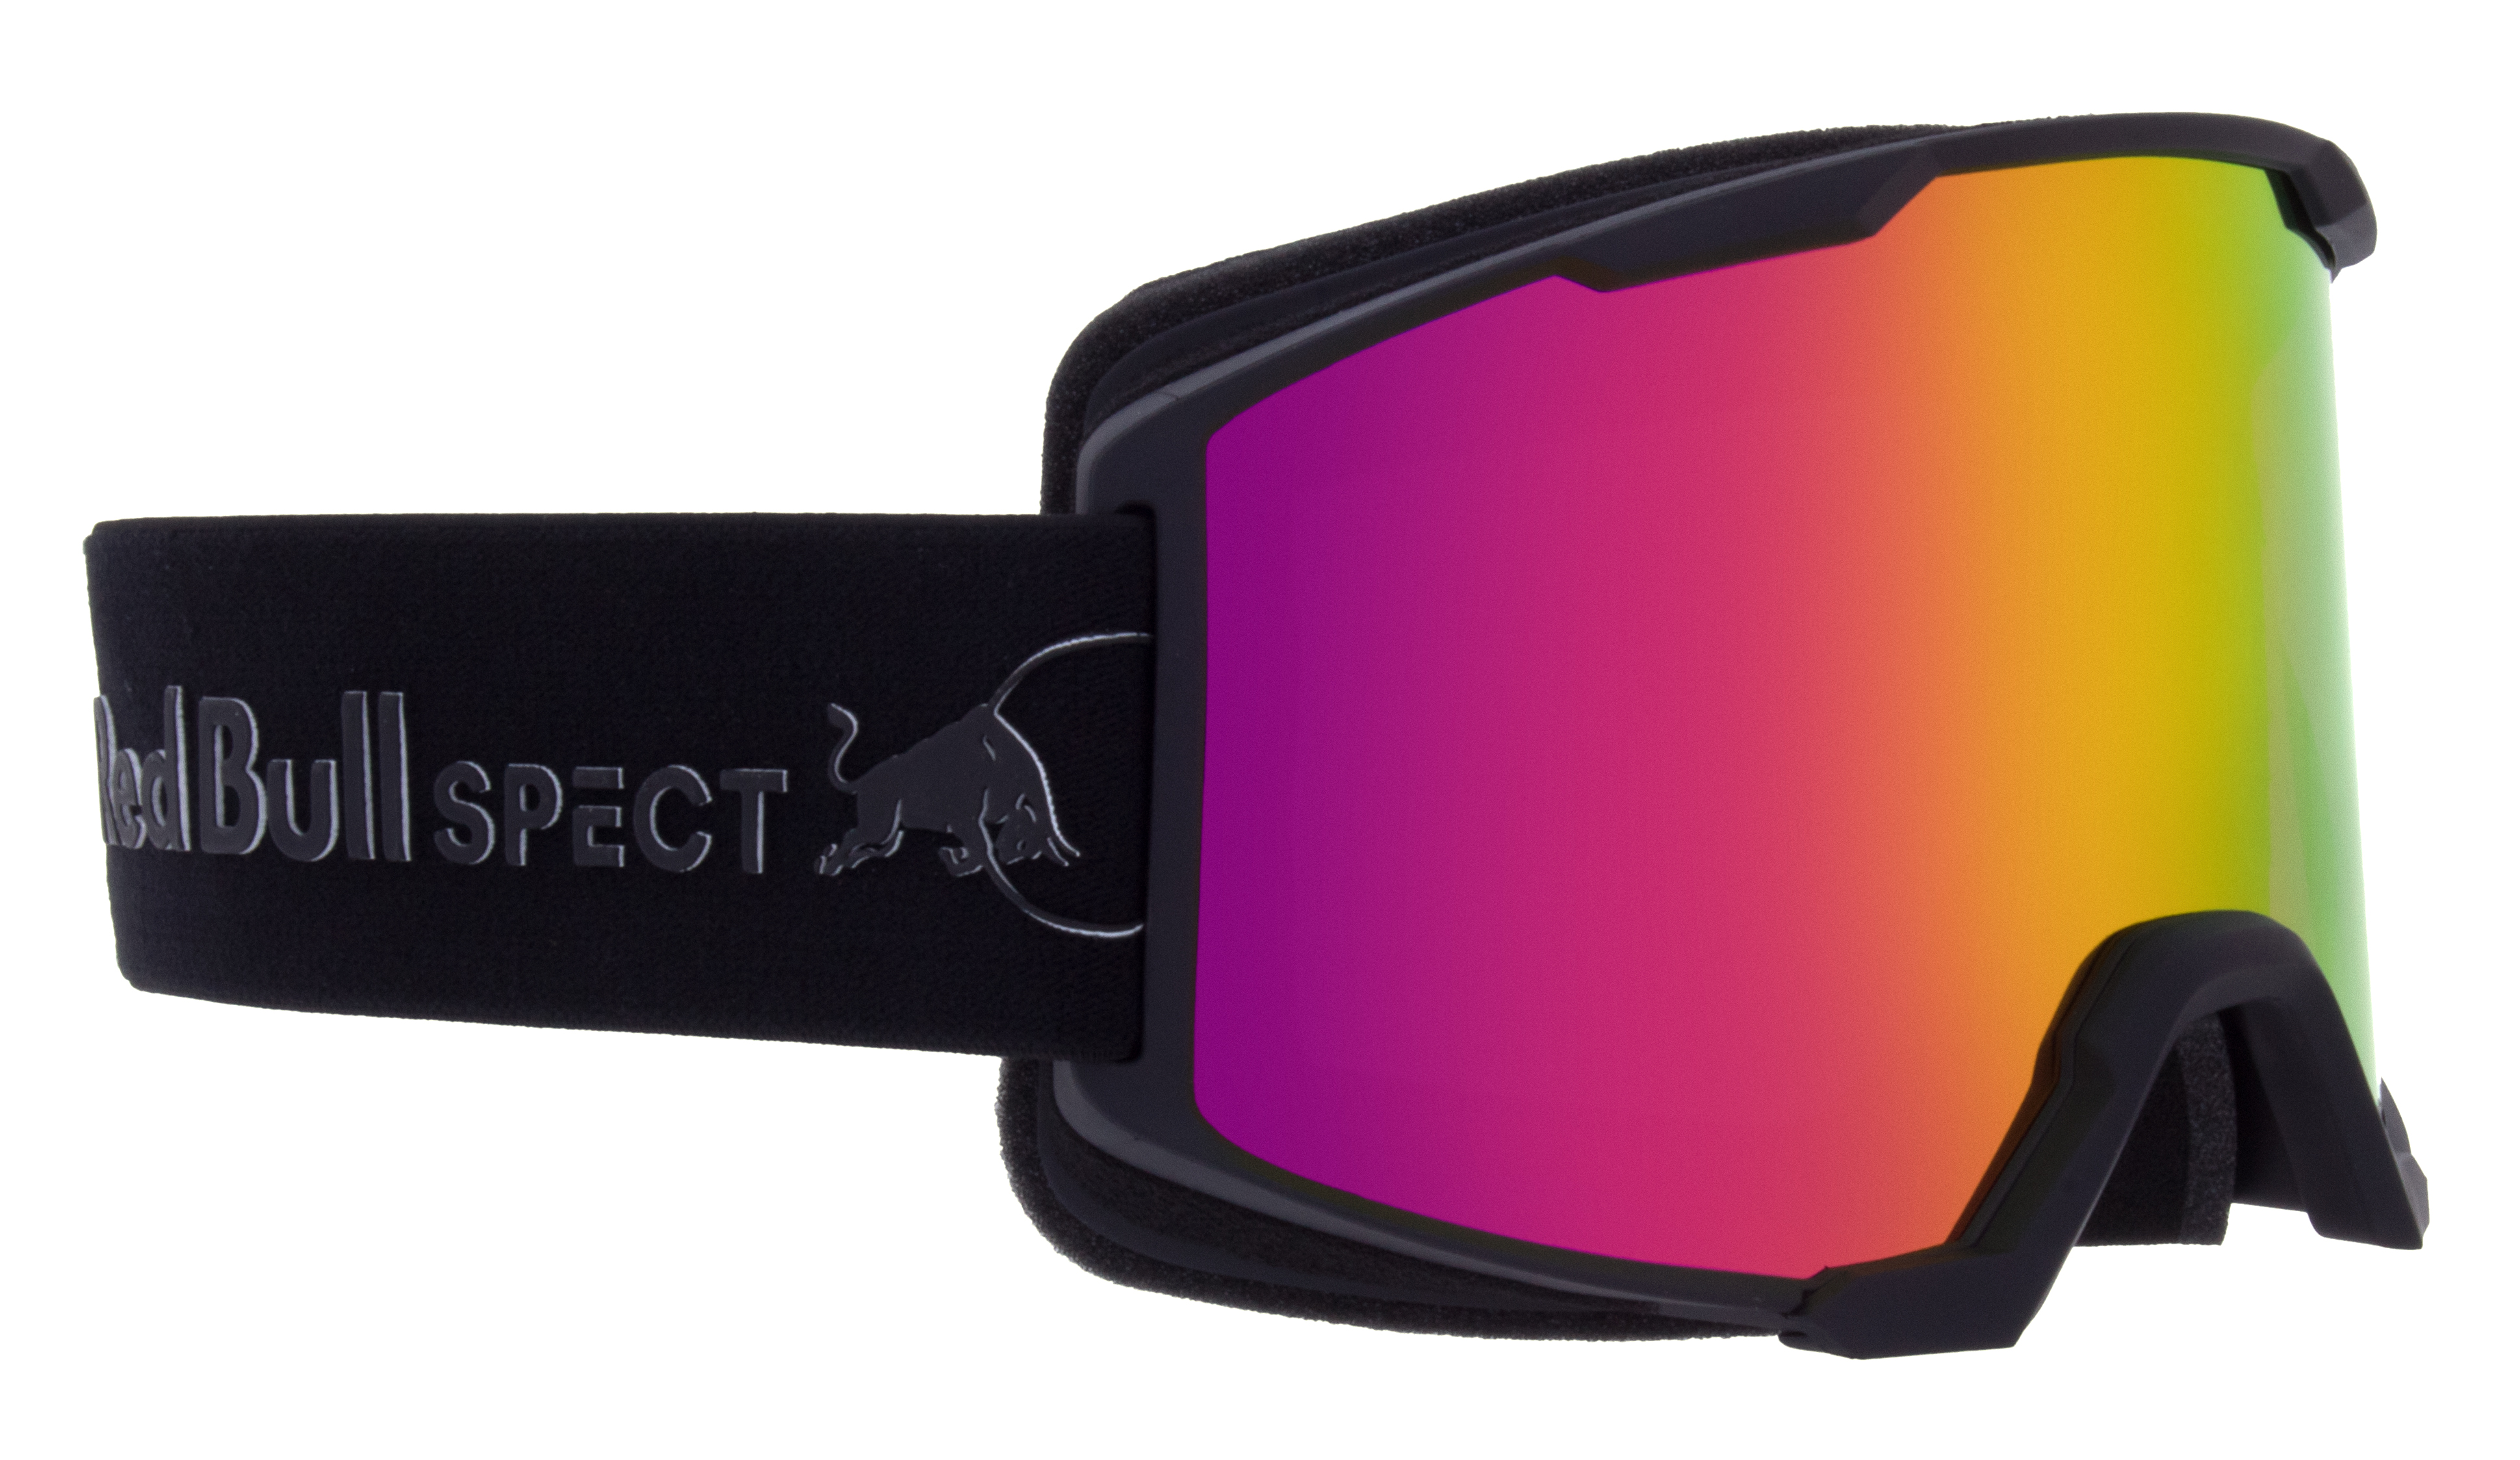 masque ski red bull spect solo-005 BU2 red bull eyewear :  -  Achat ski, vente matériel de ski, snowboard, vente blouson et pantalon ski  technique et accessoire montagne.